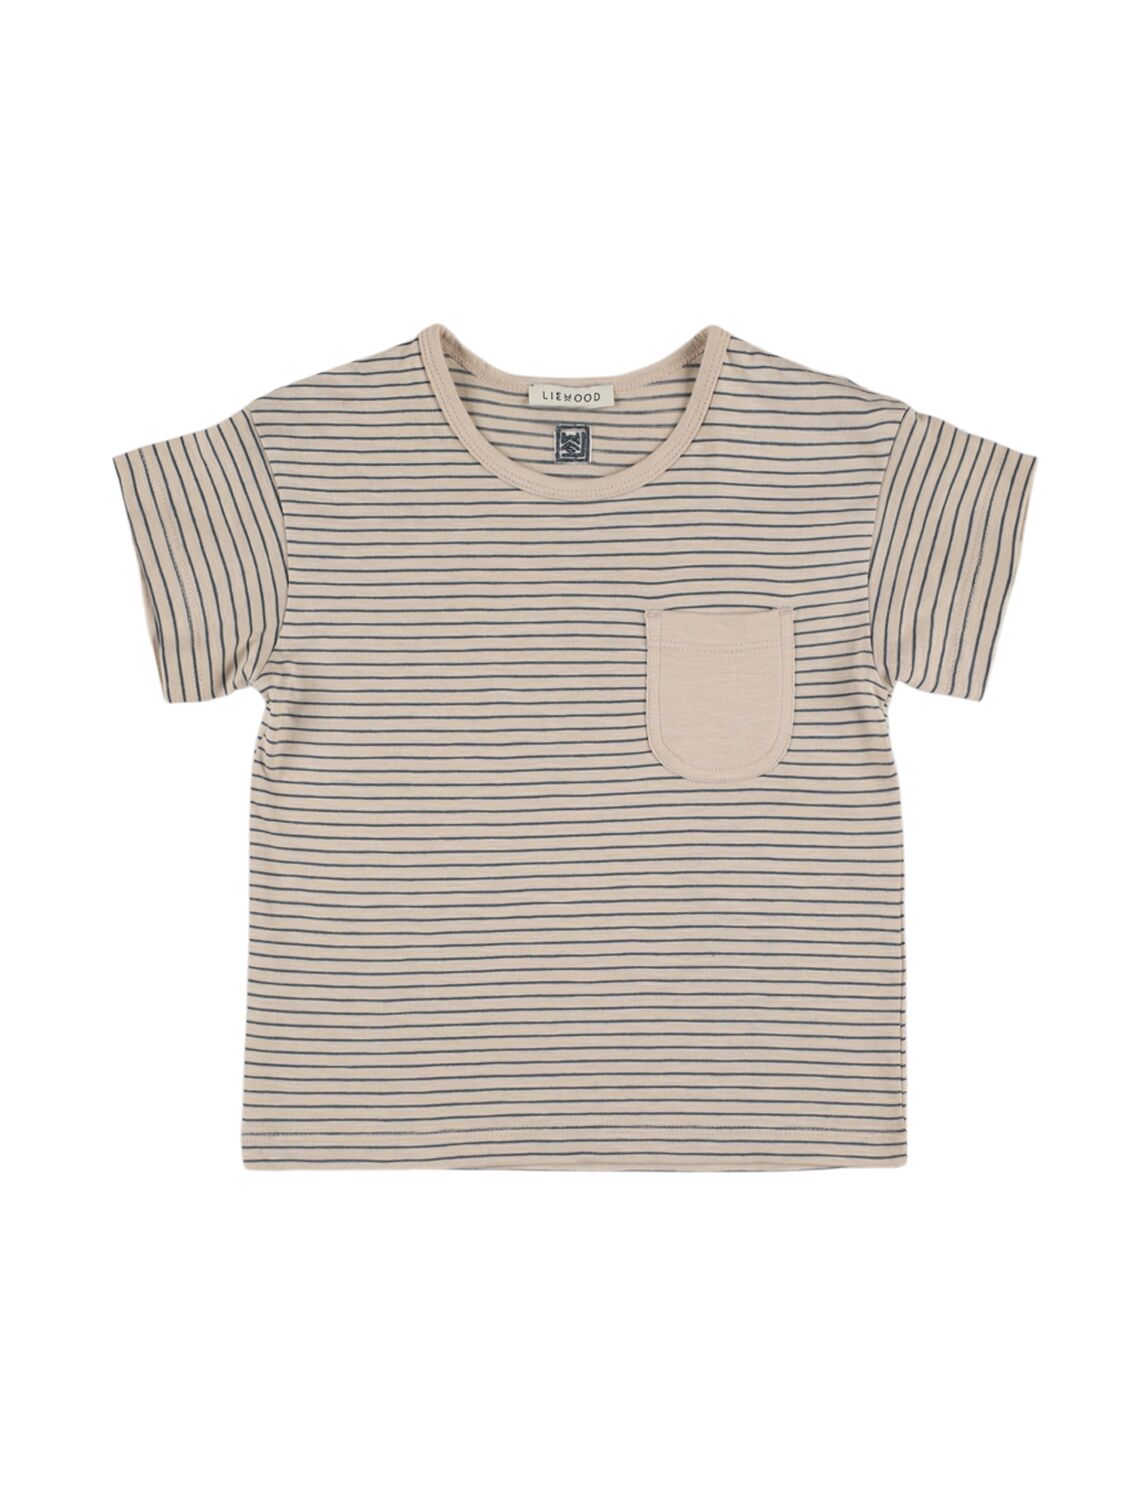 Liewood Kids' Striped Organic Cotton T-shirt In Gray